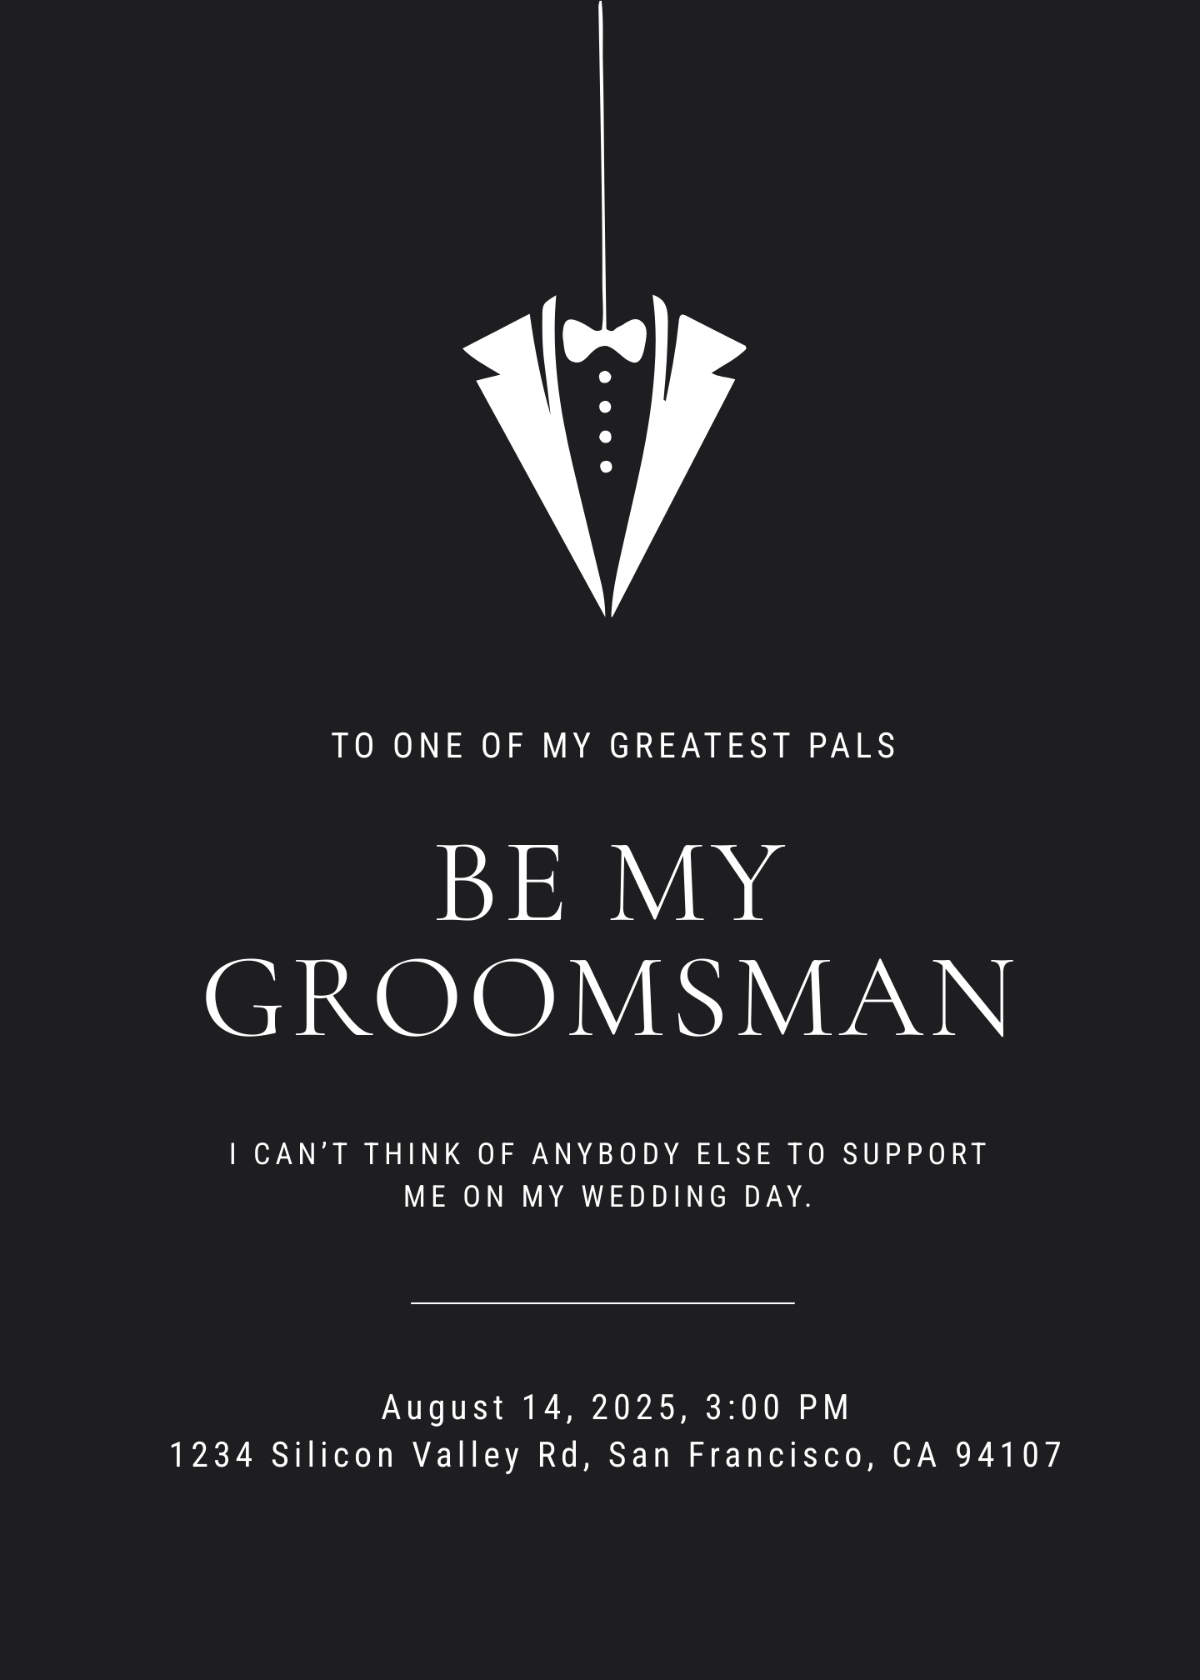 Groomsmen Invitation Card